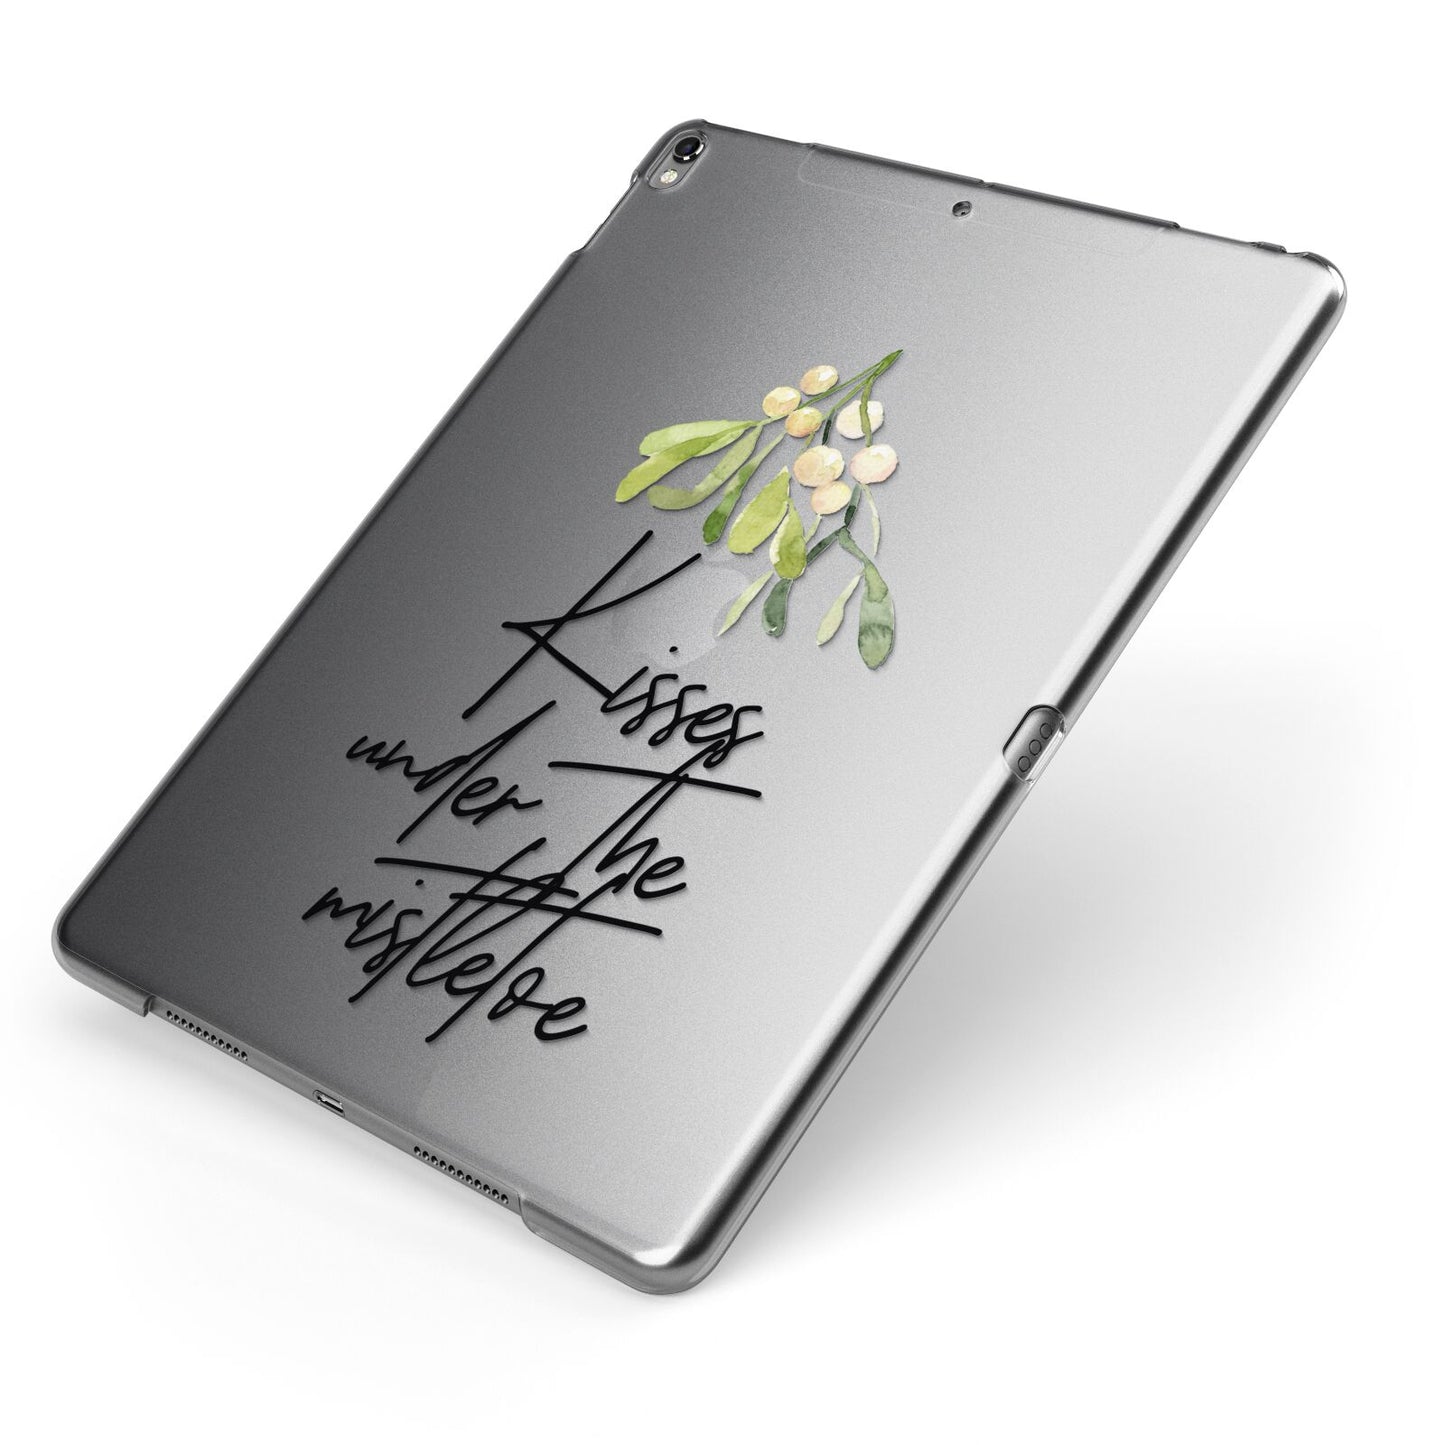 Kisses Under The Mistletoe Apple iPad Case on Grey iPad Side View